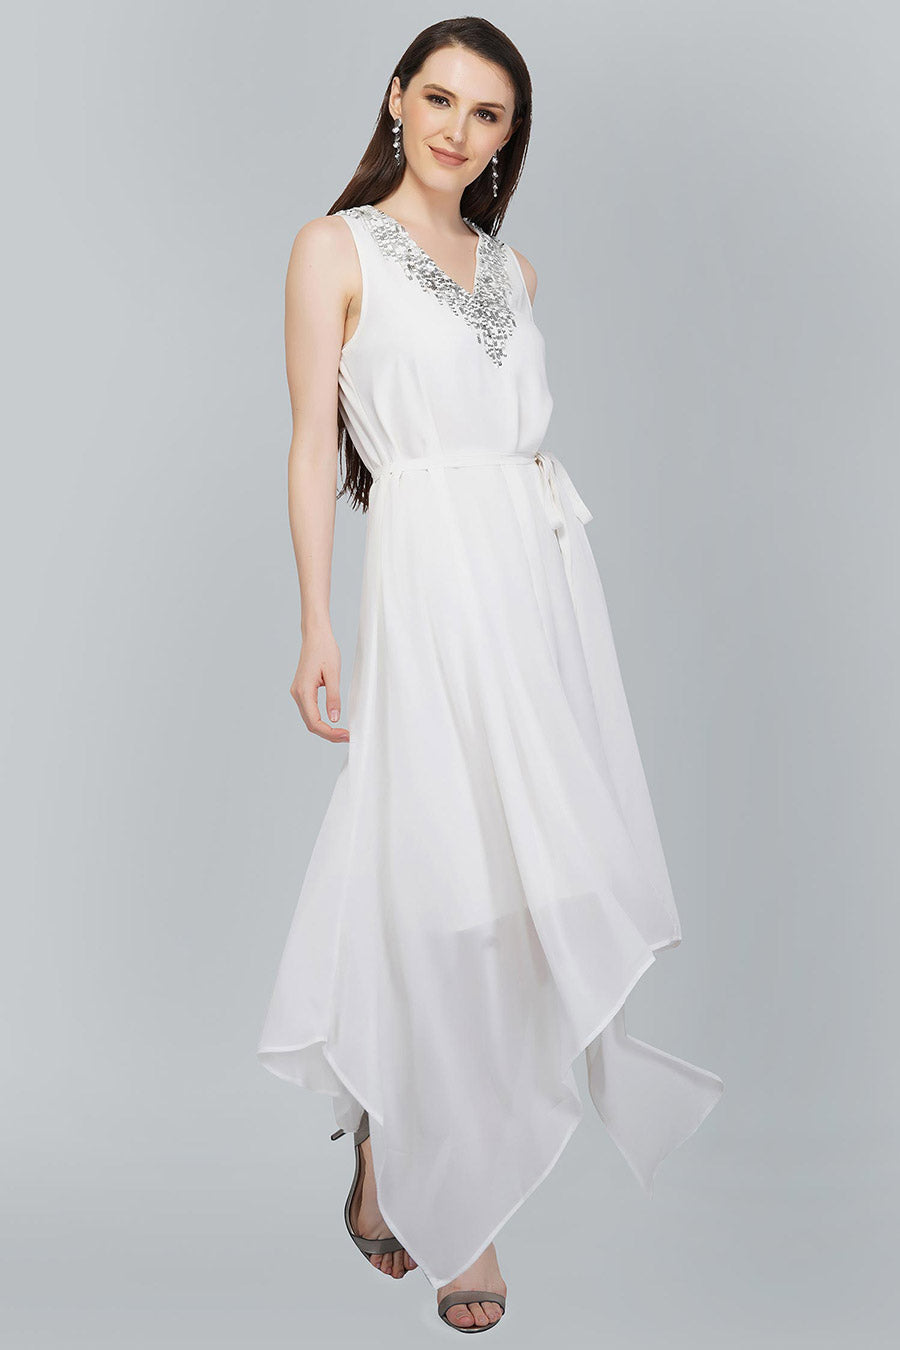 Embellished Handkerchief White Dress